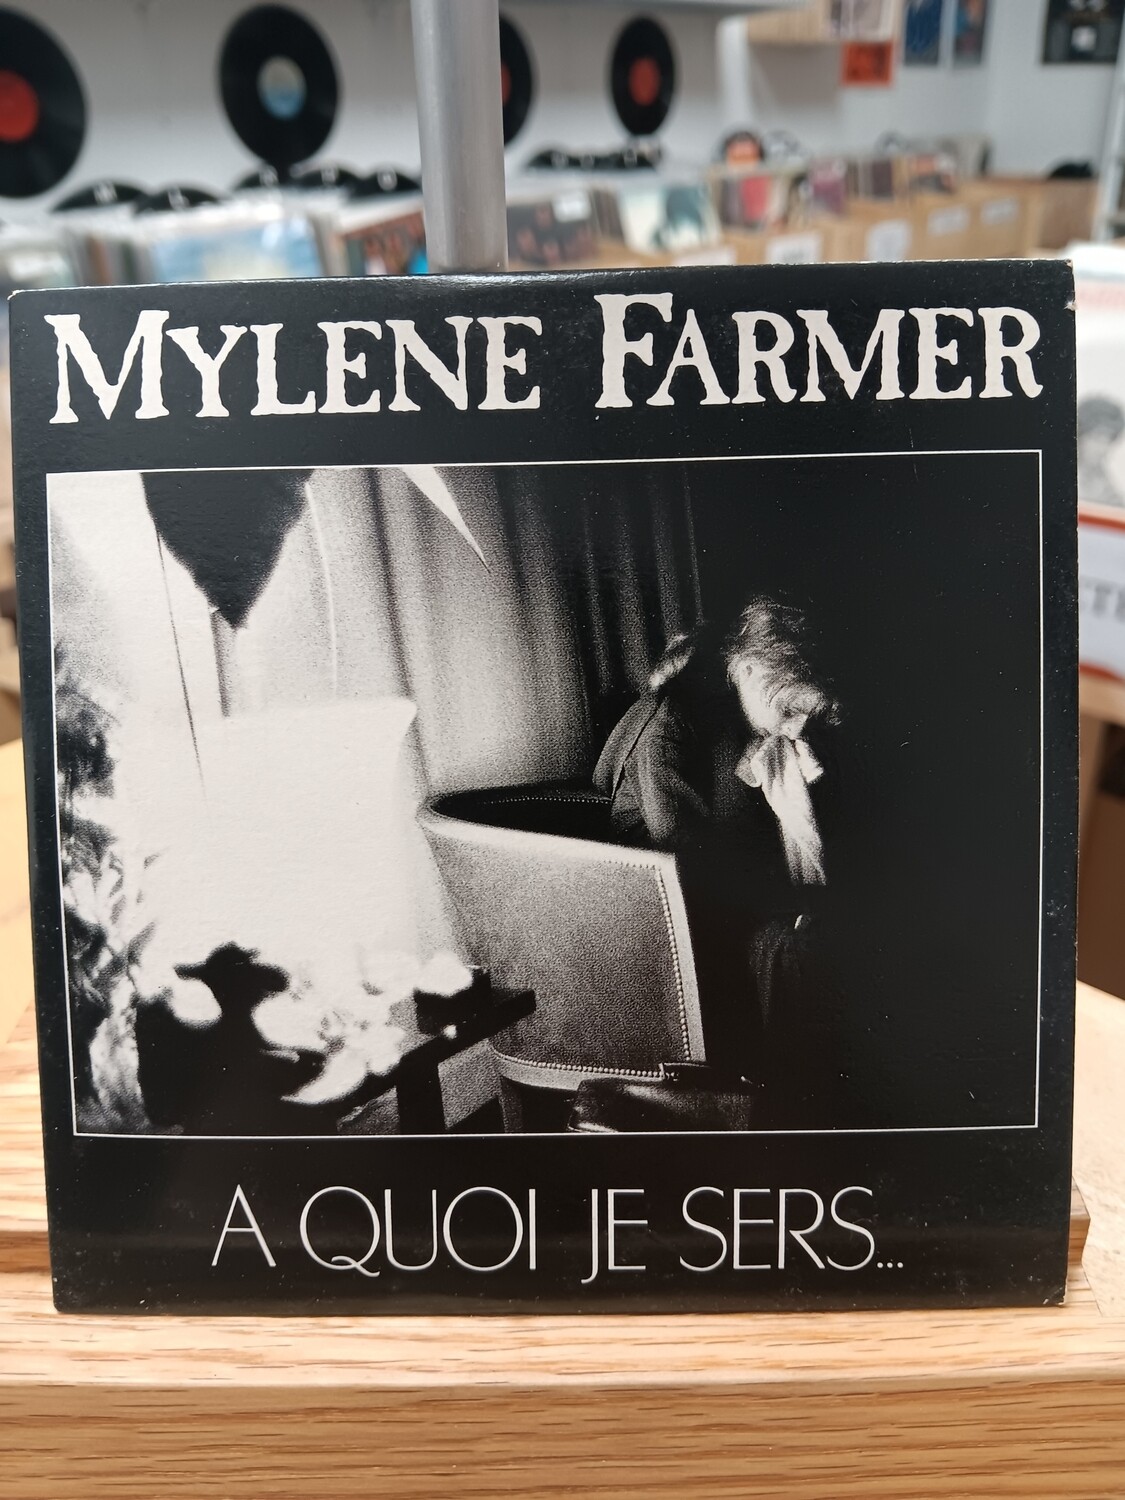 Mylene Farmer - A quoi je sers (CD)